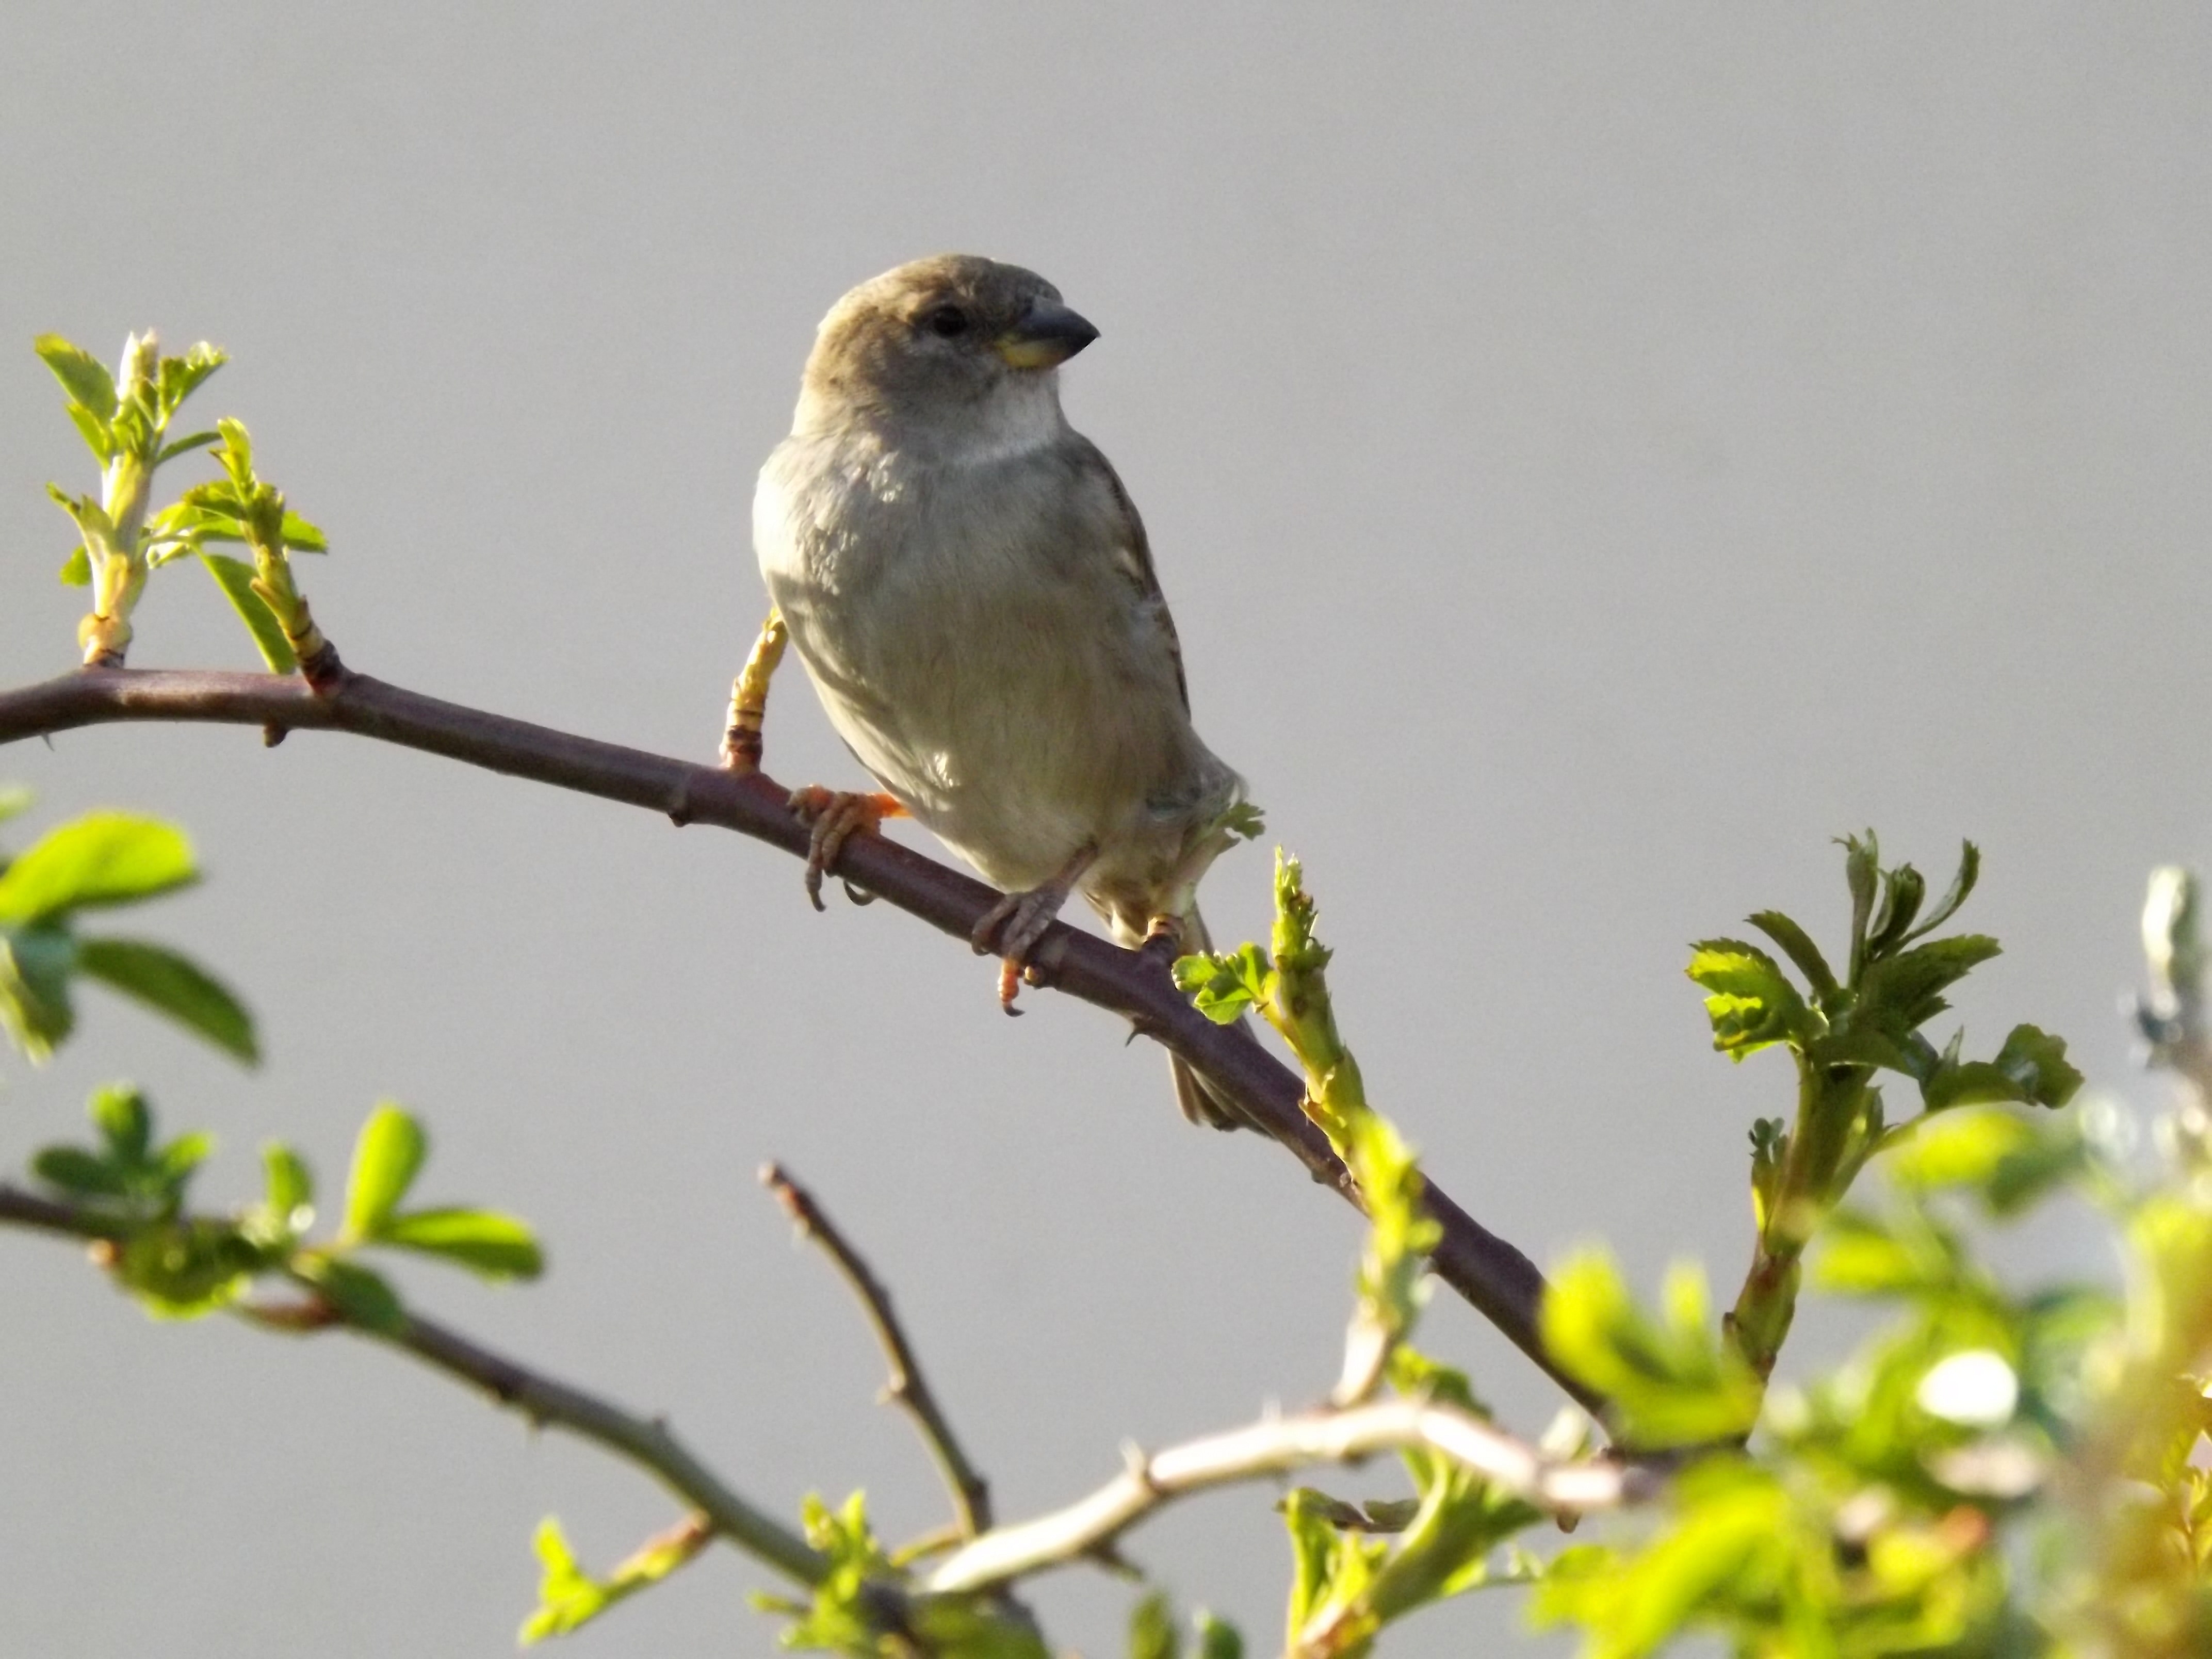 gray and white short beak bird on brown branch during daytime